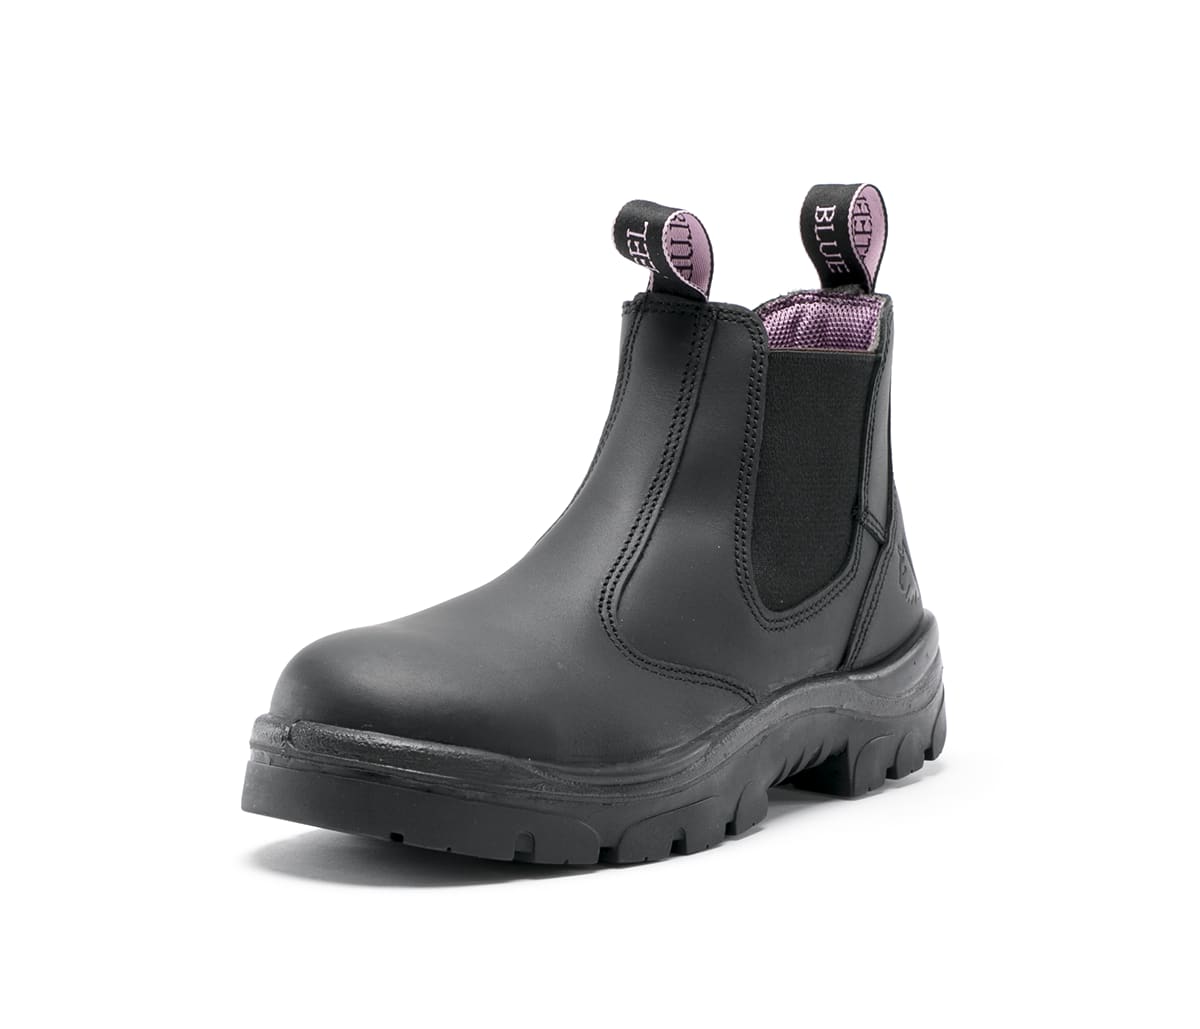 fashionable steel toe boots